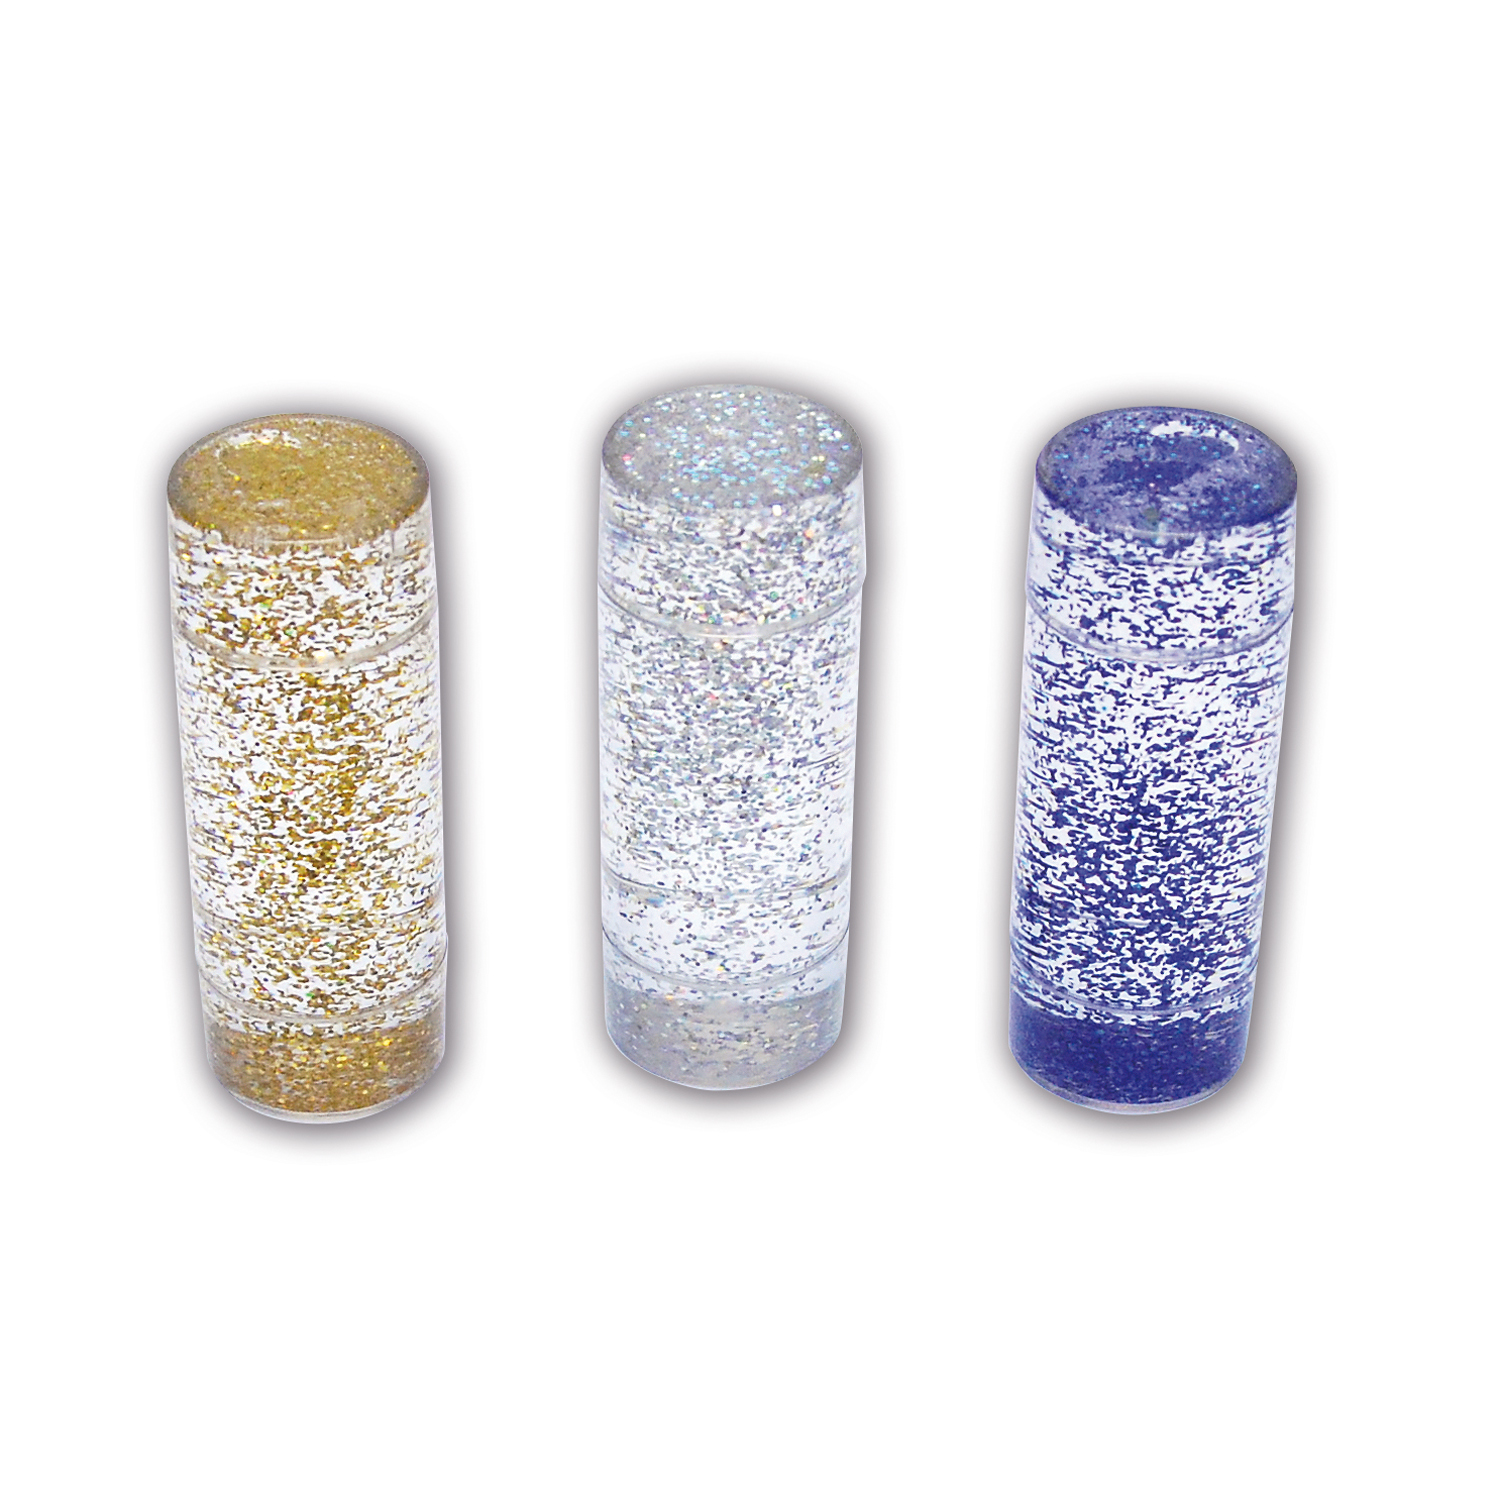 TickiT Sensory Glitter Storm - Set of 3 - Blue, Silver, Gold